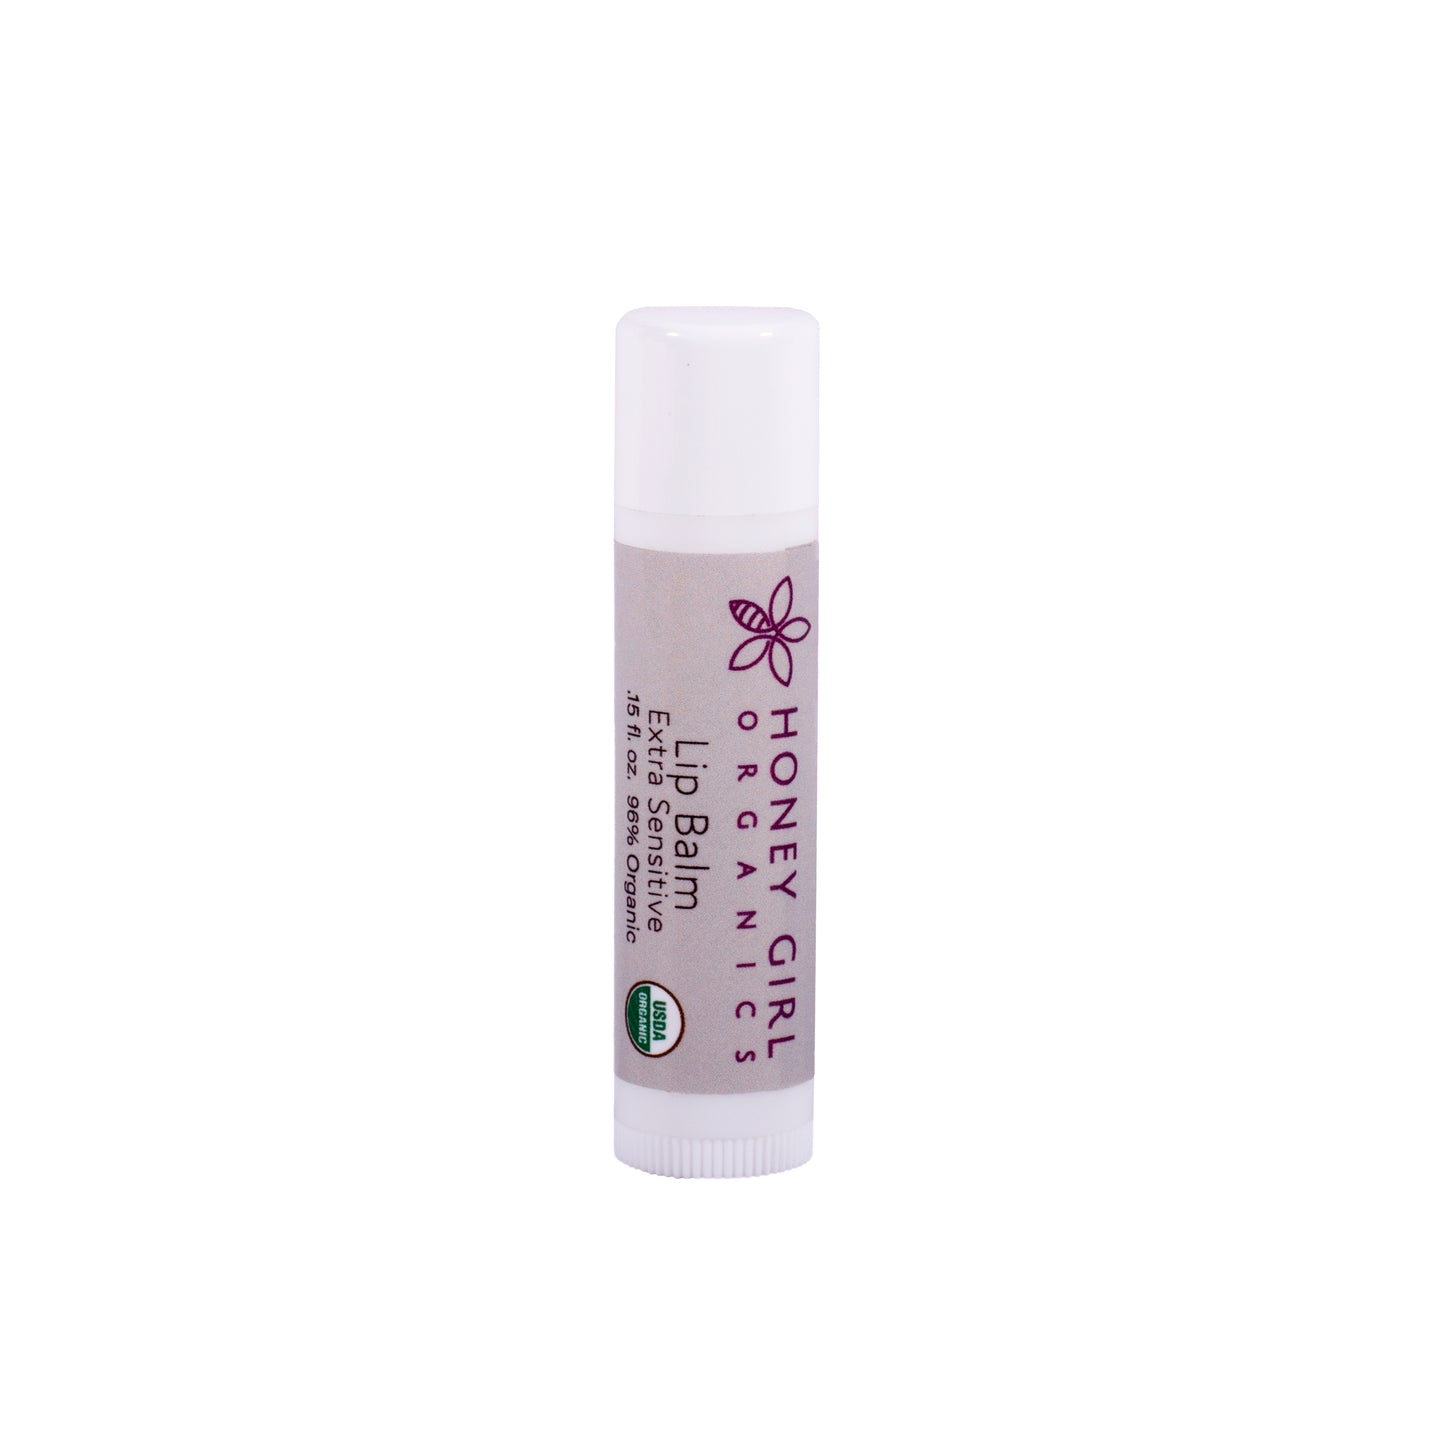 Lip Balm Stick Extra Sensitive - Organic